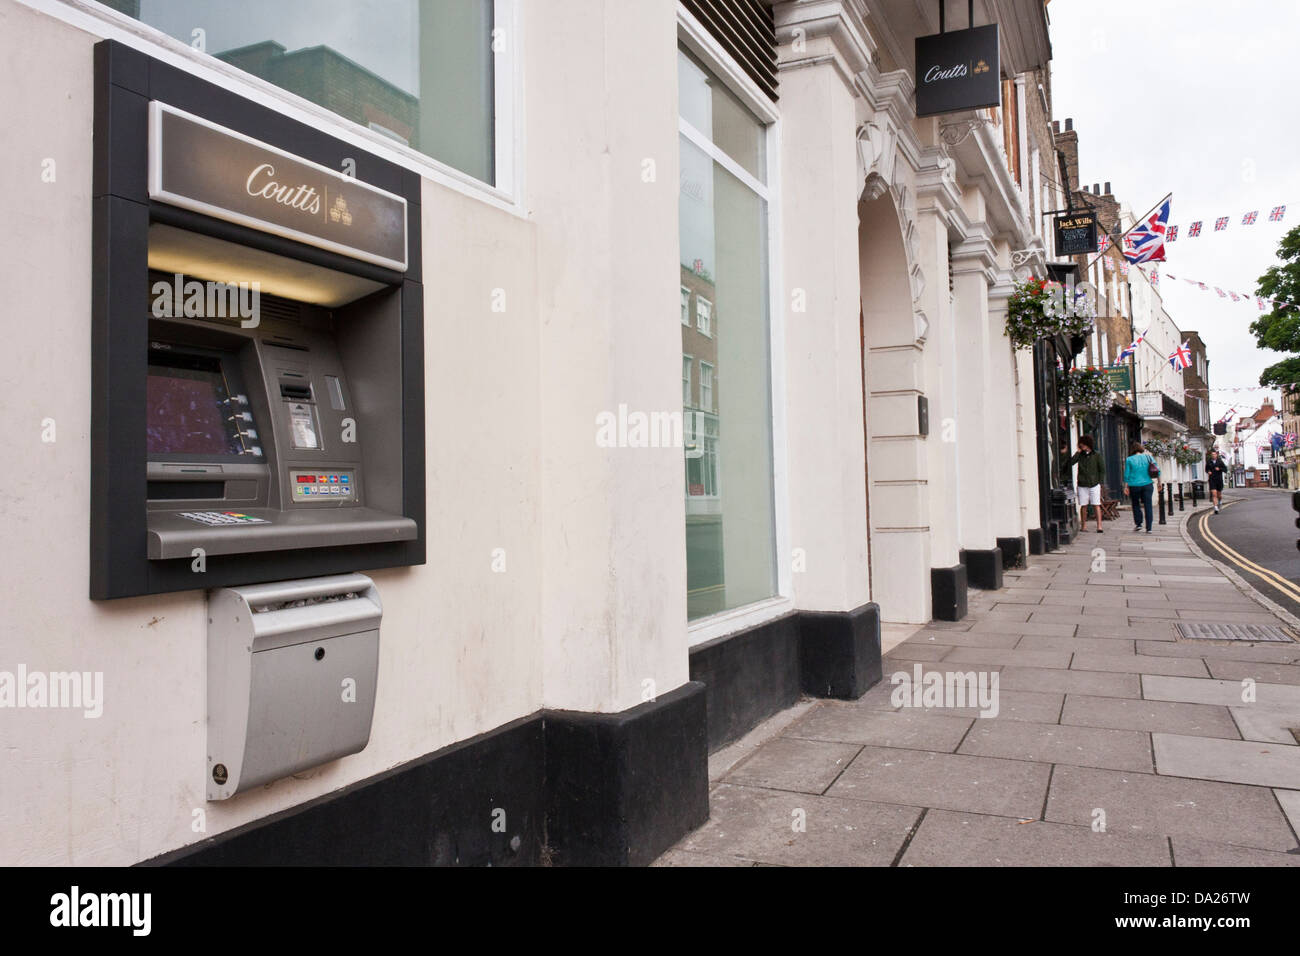 Coutts bank cash machine in Eton High Street, Berkshire, England, UK Stock Photo